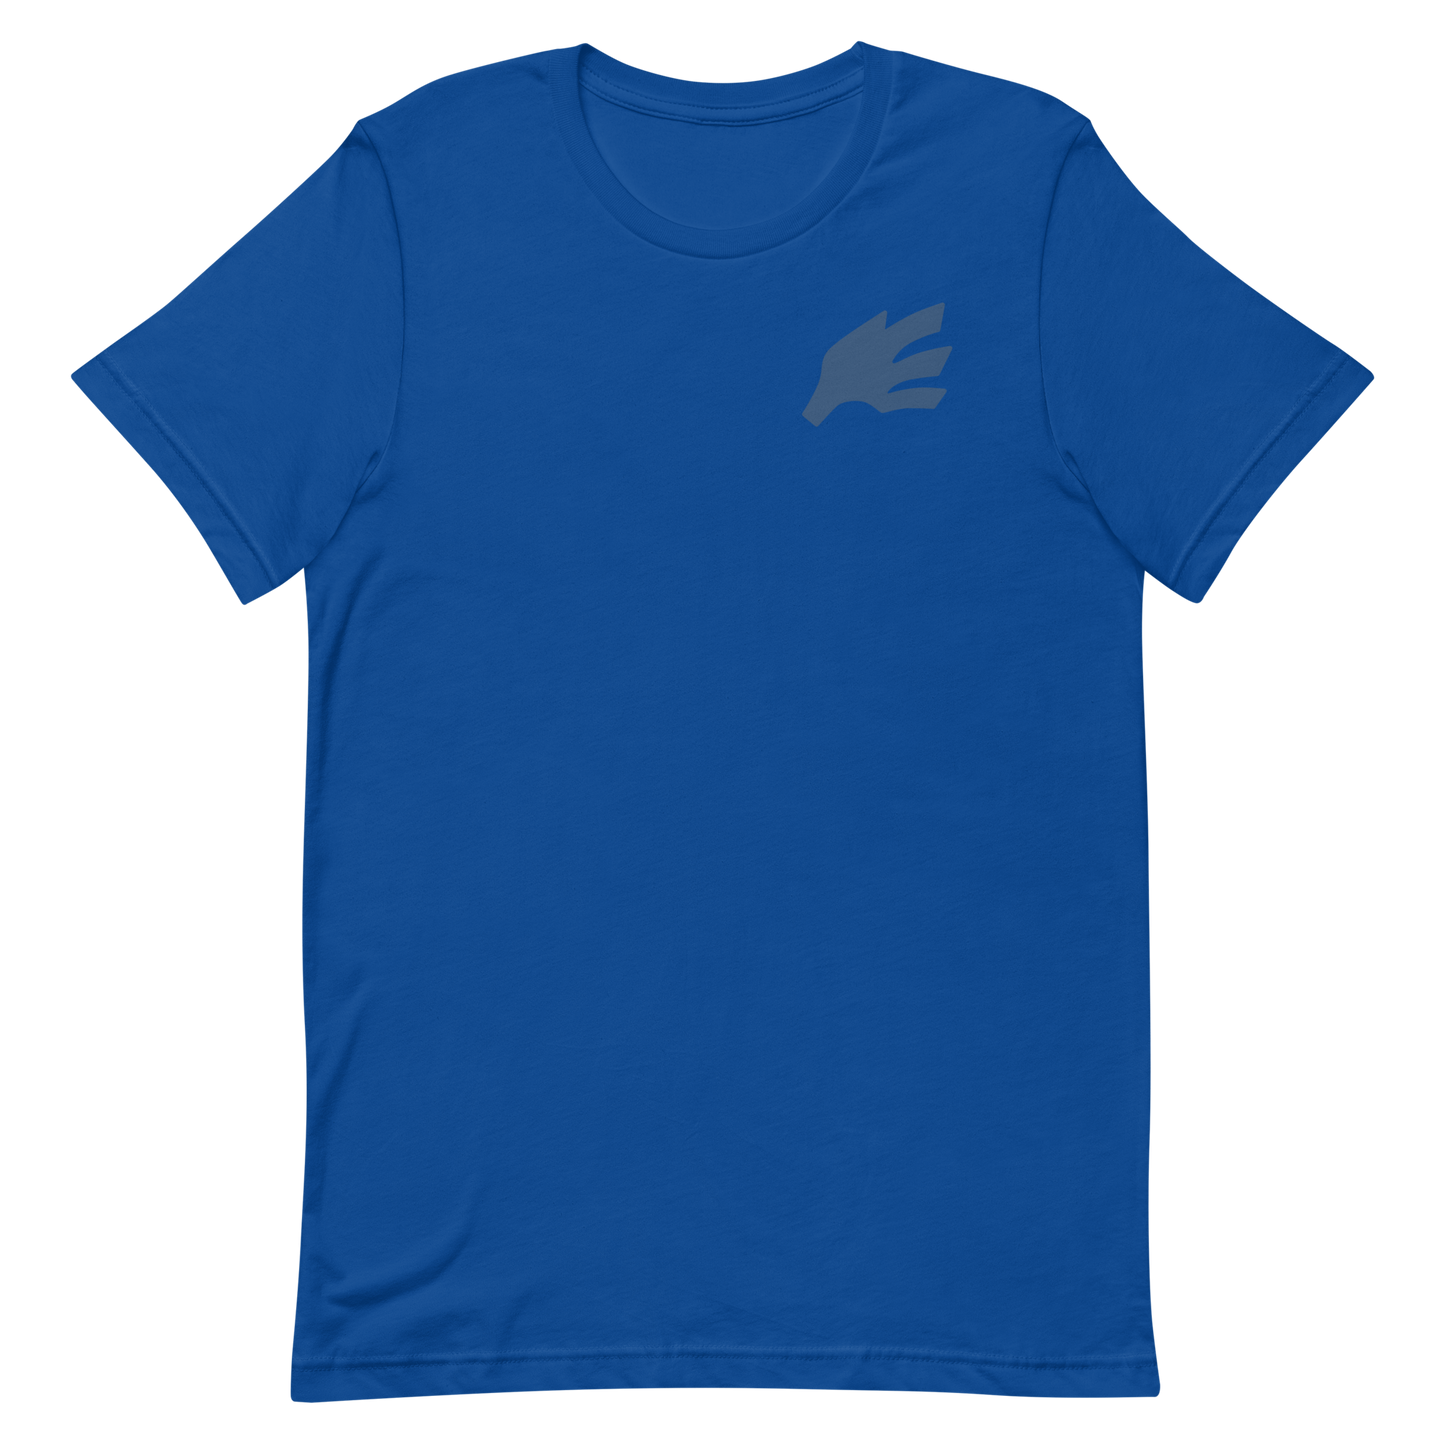 Clone T-shirt - Hawk